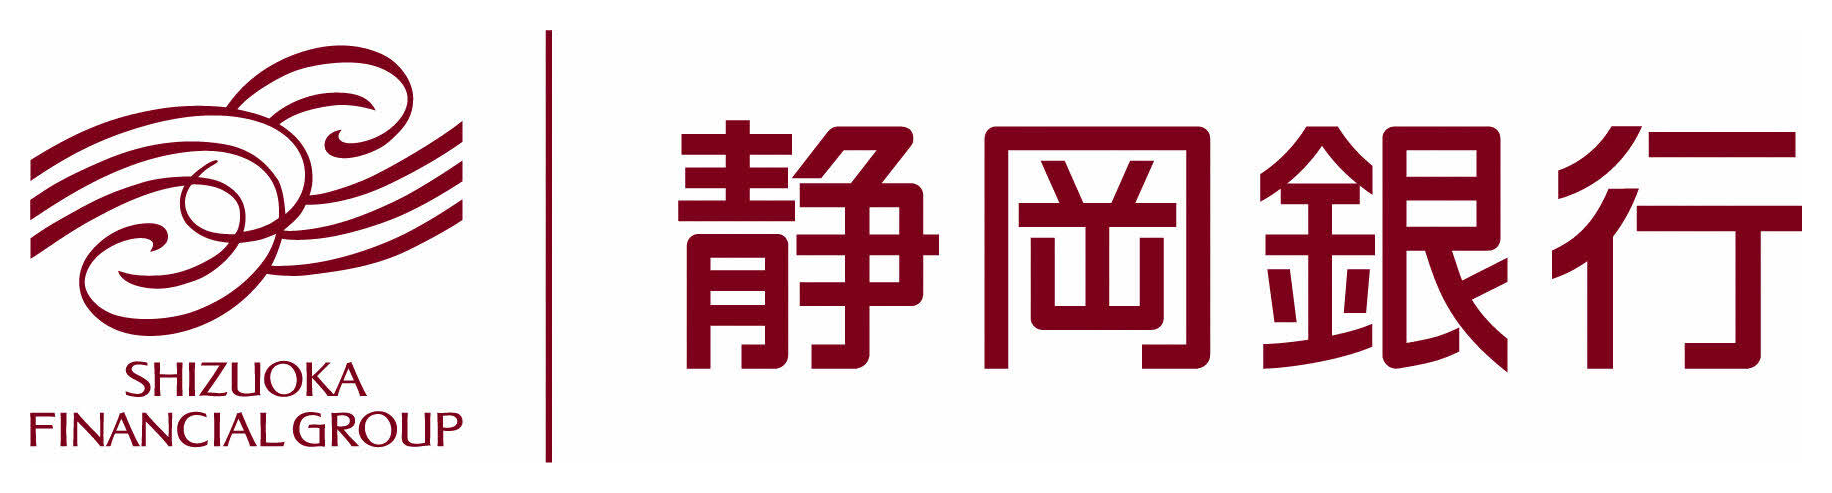 shizuoka logo